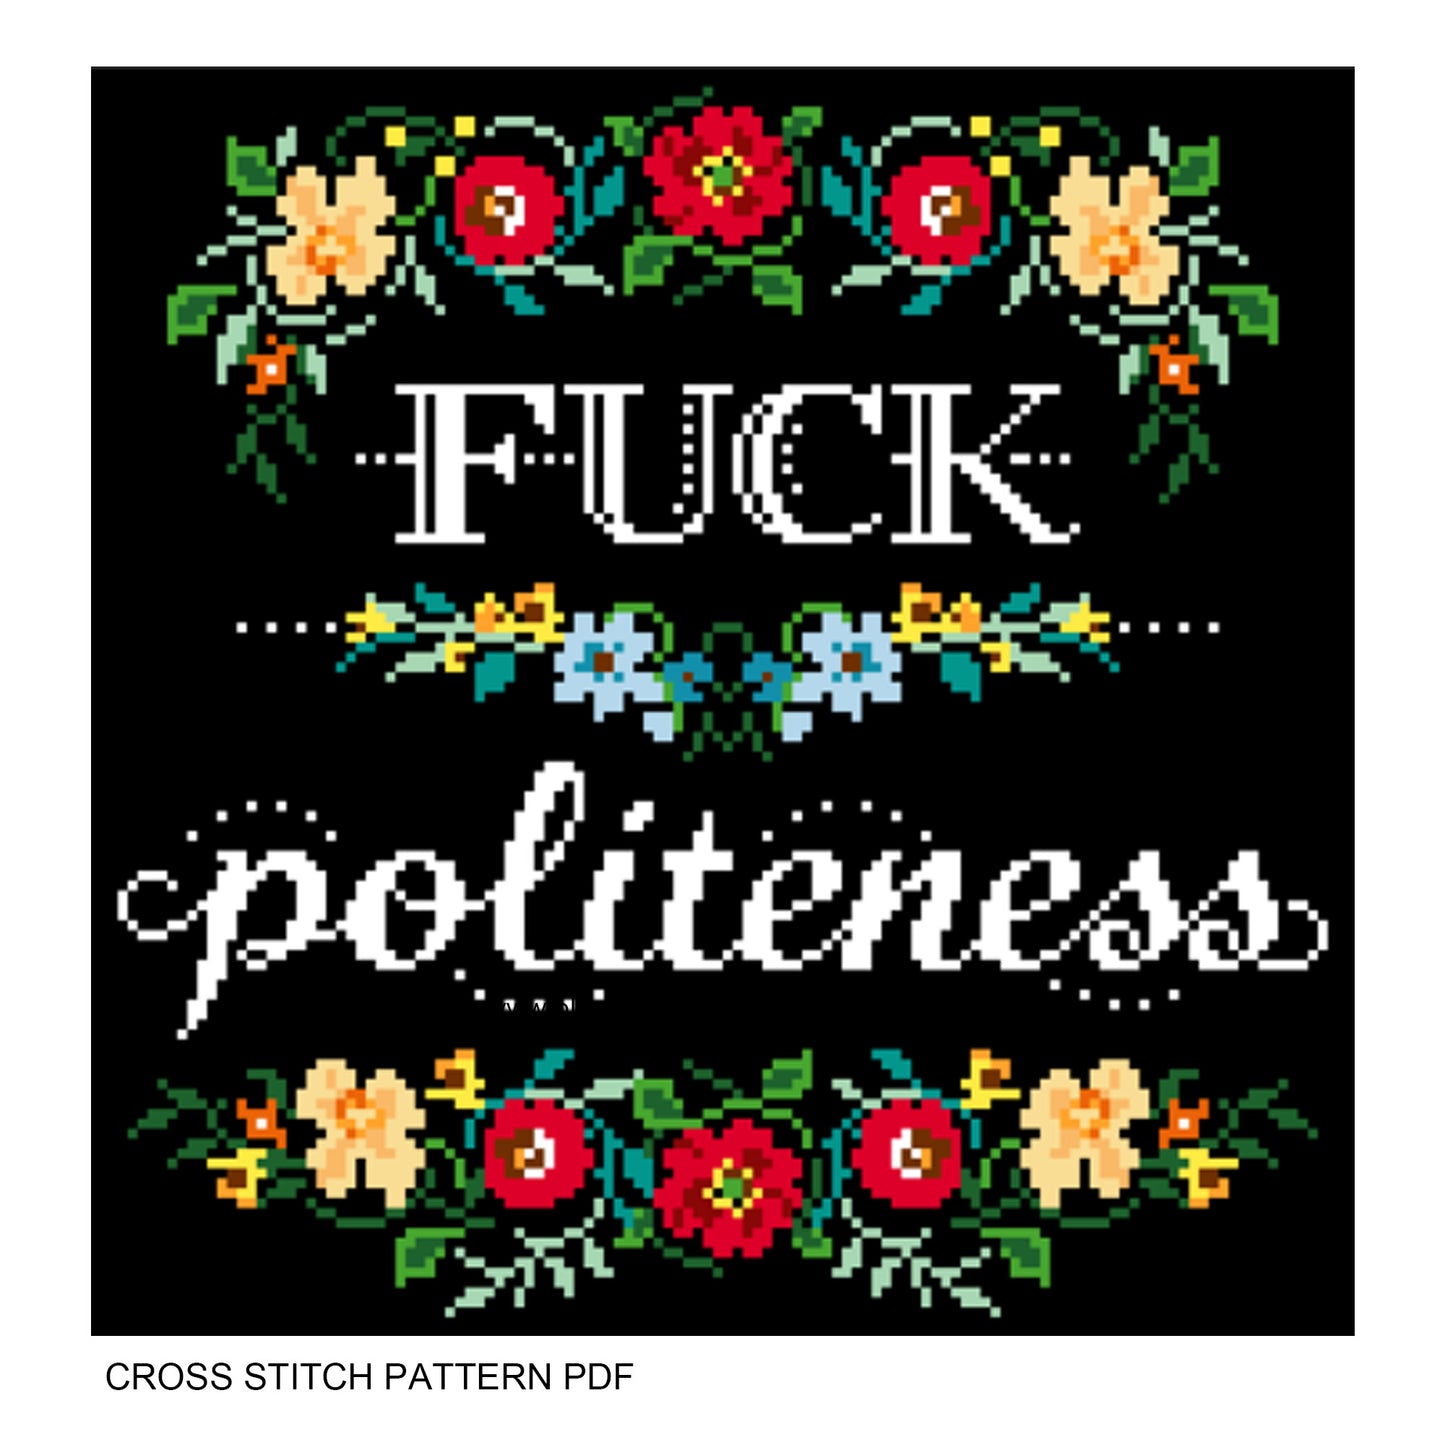 Fuck Politeness - Cross Stitch Pattern PDF.